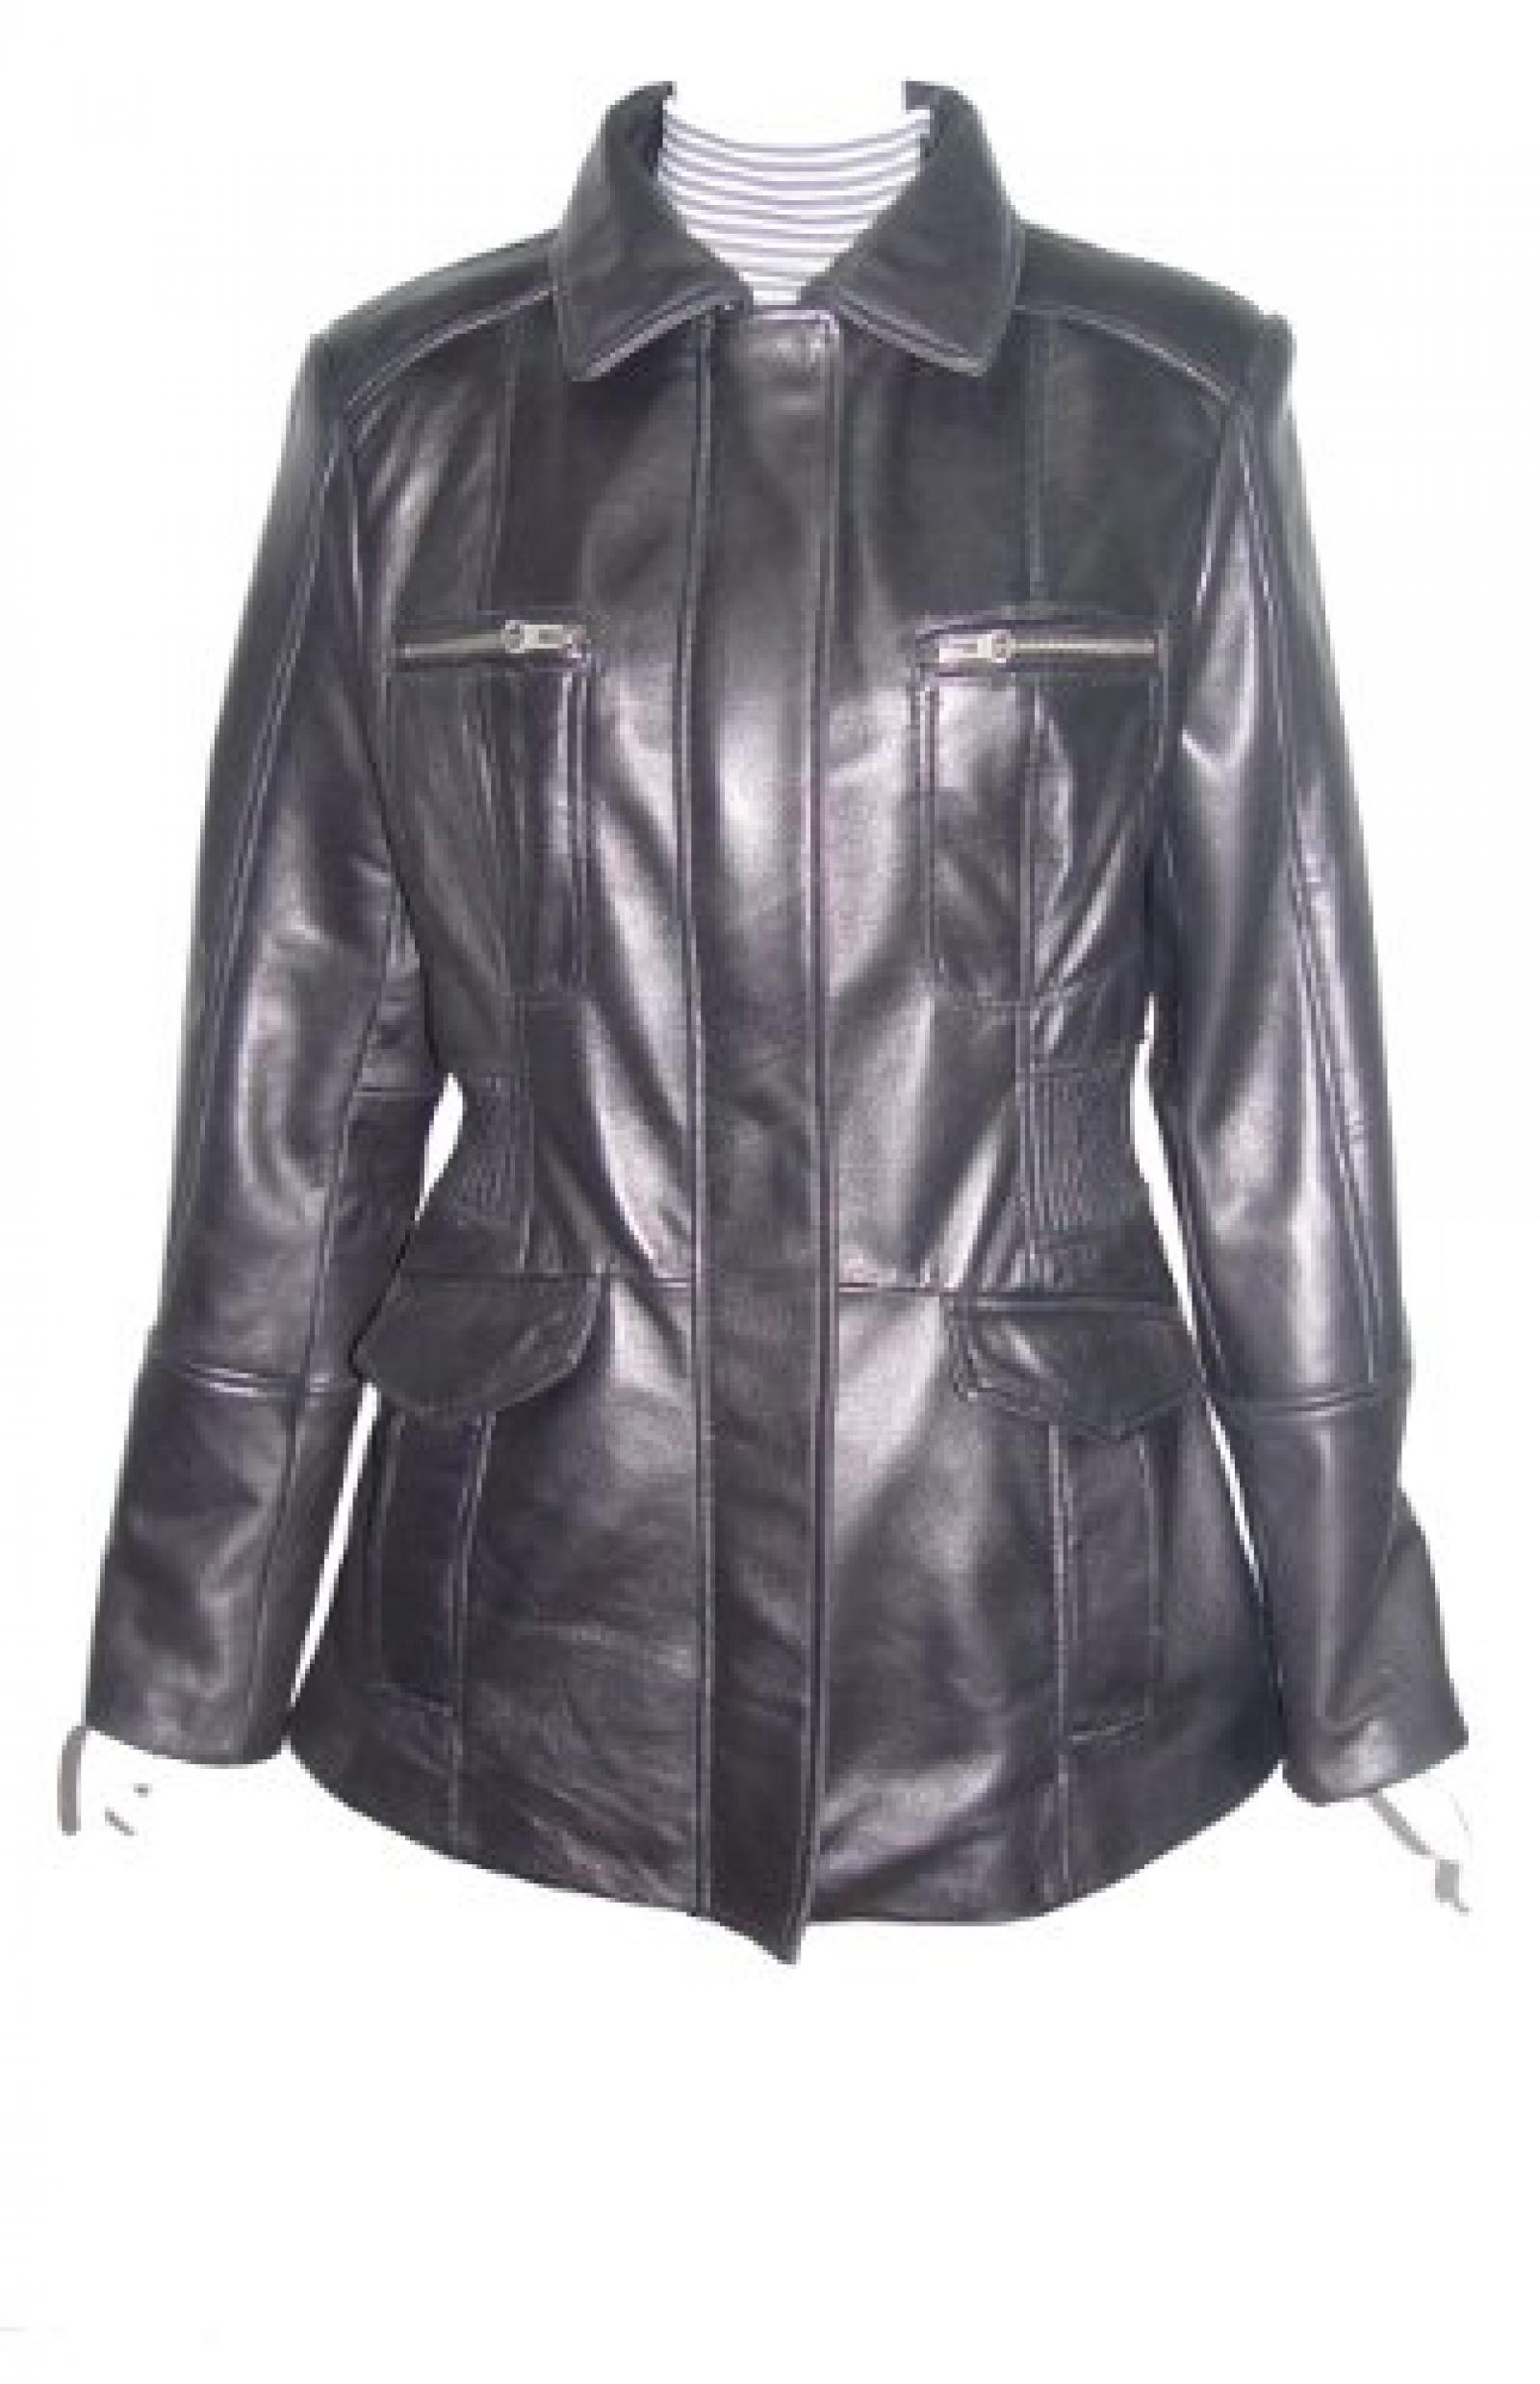 Nettailor Women PLUS SIZE 4203 Leather Casual Jacket Placket Front Chest Pocket 